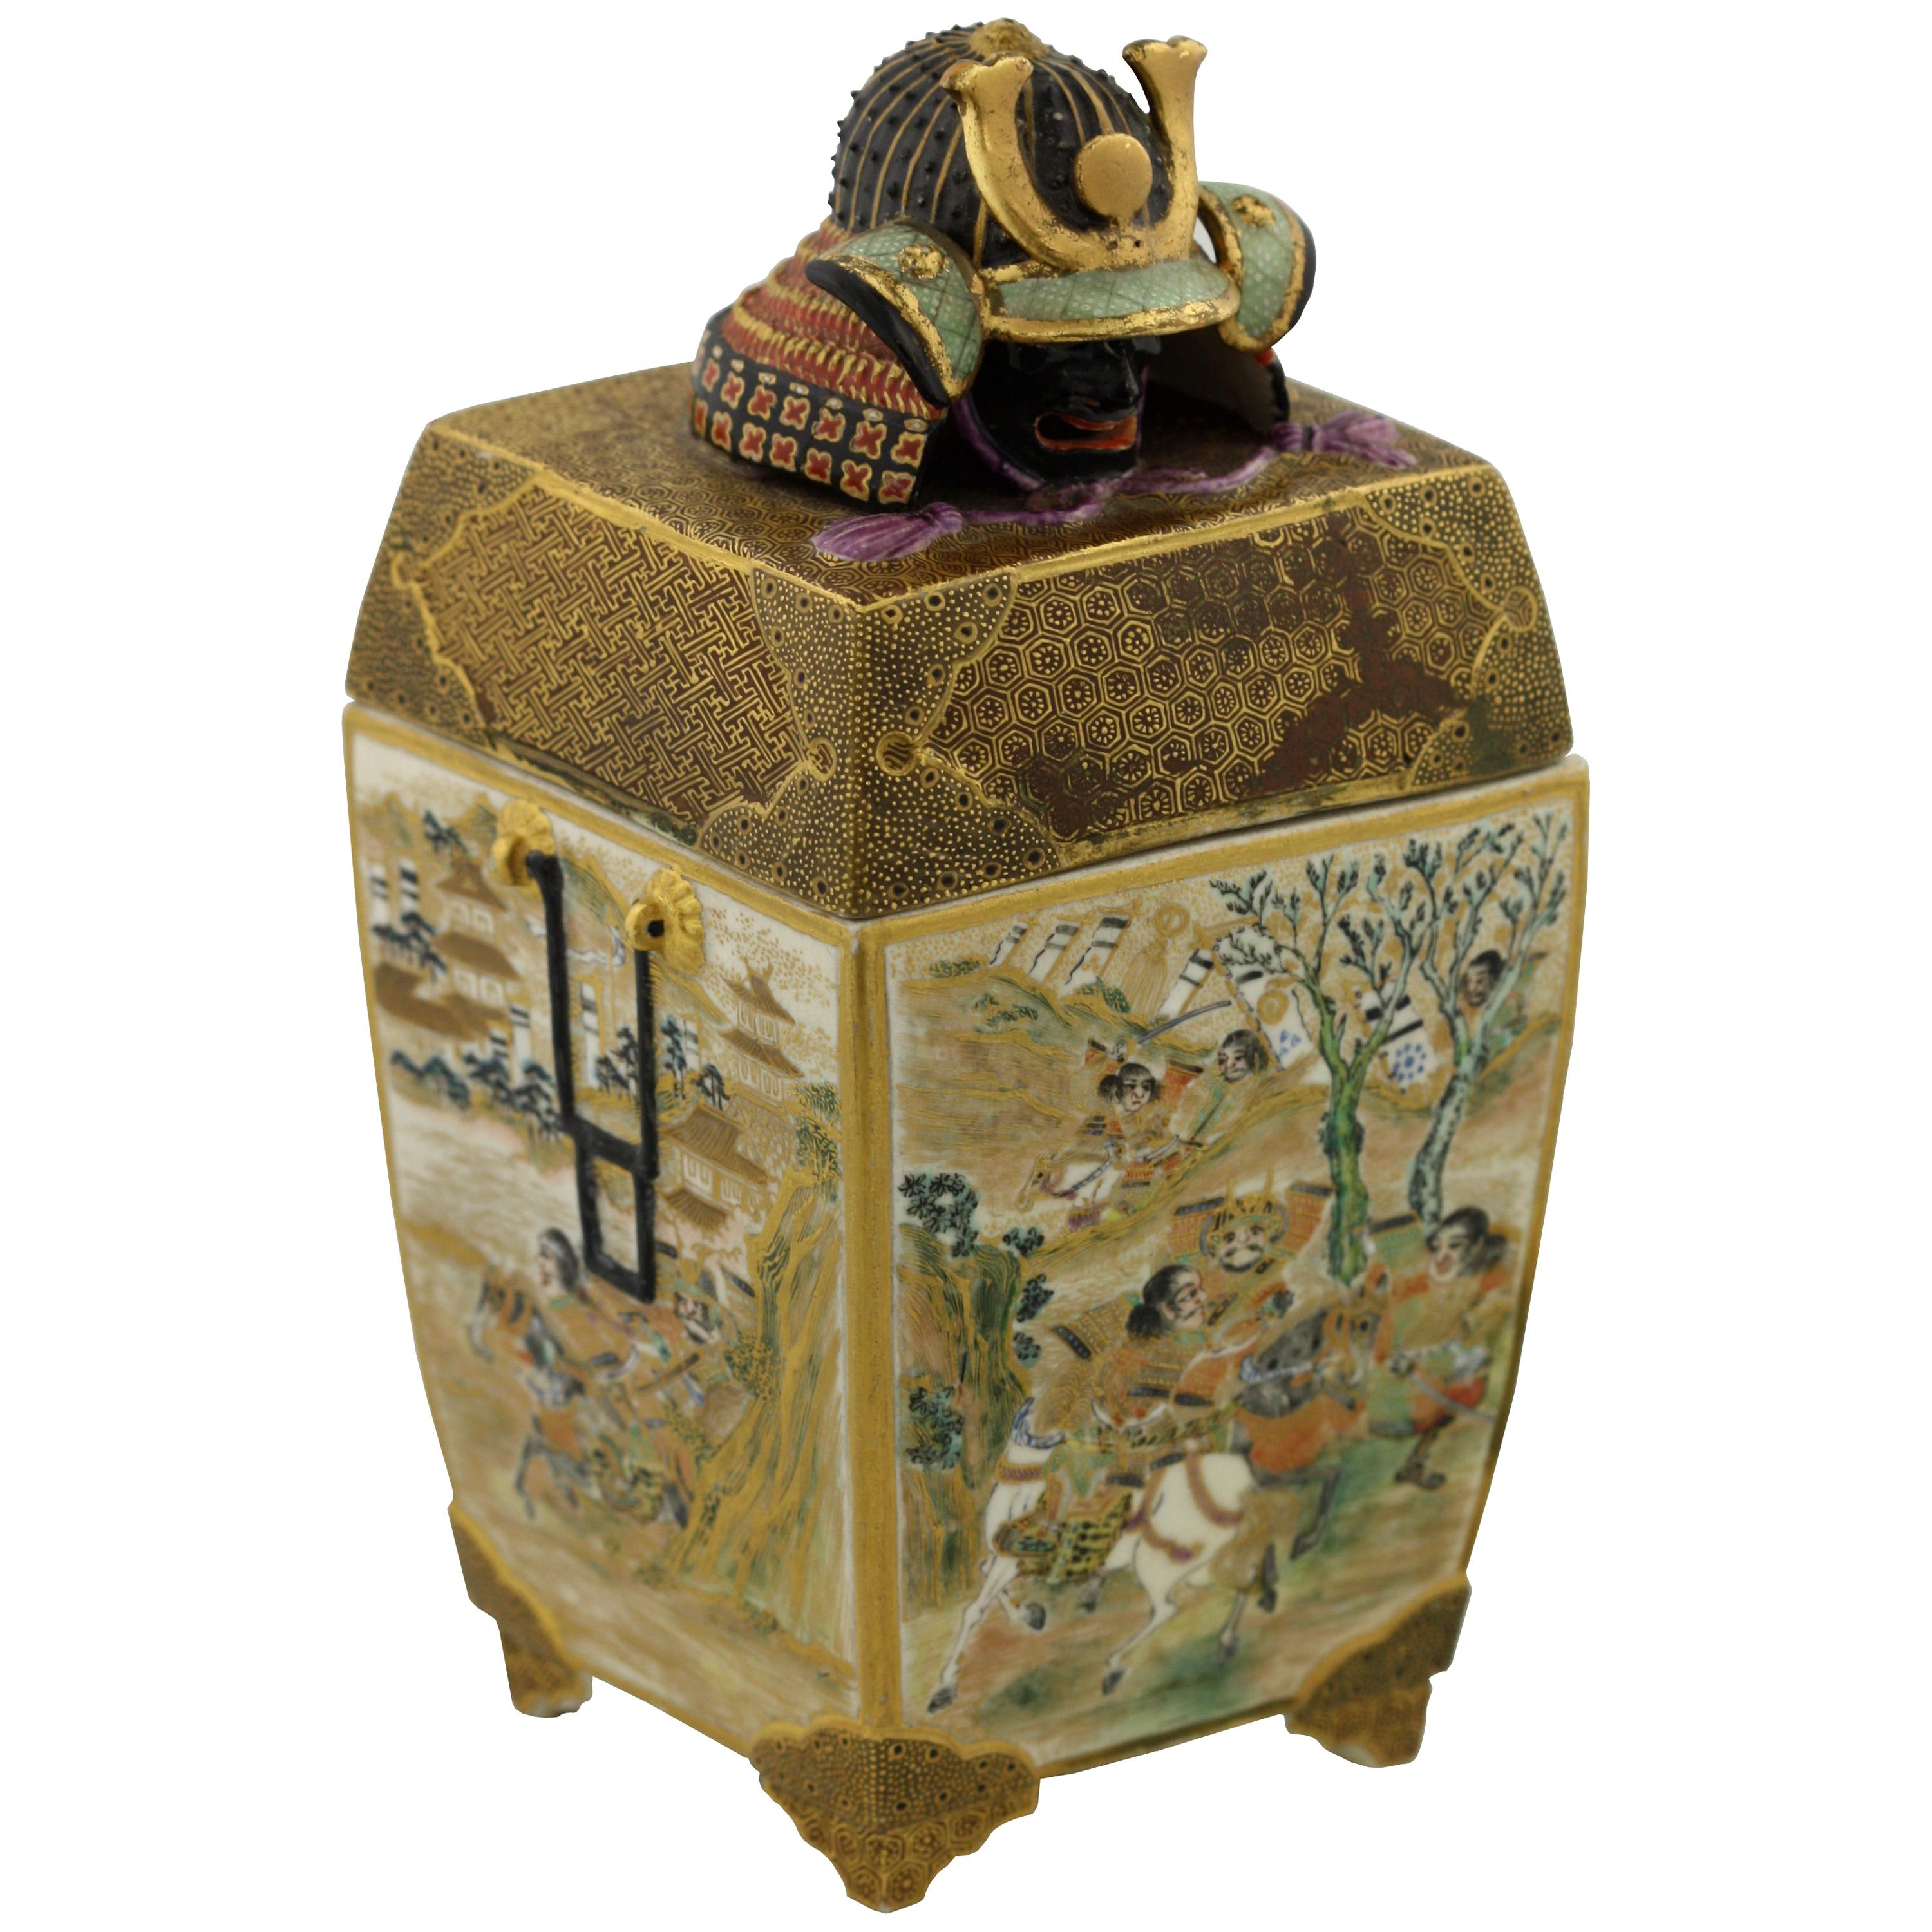 Satsuma Earthenware Vase and Cover, Japanese, Meiji Period